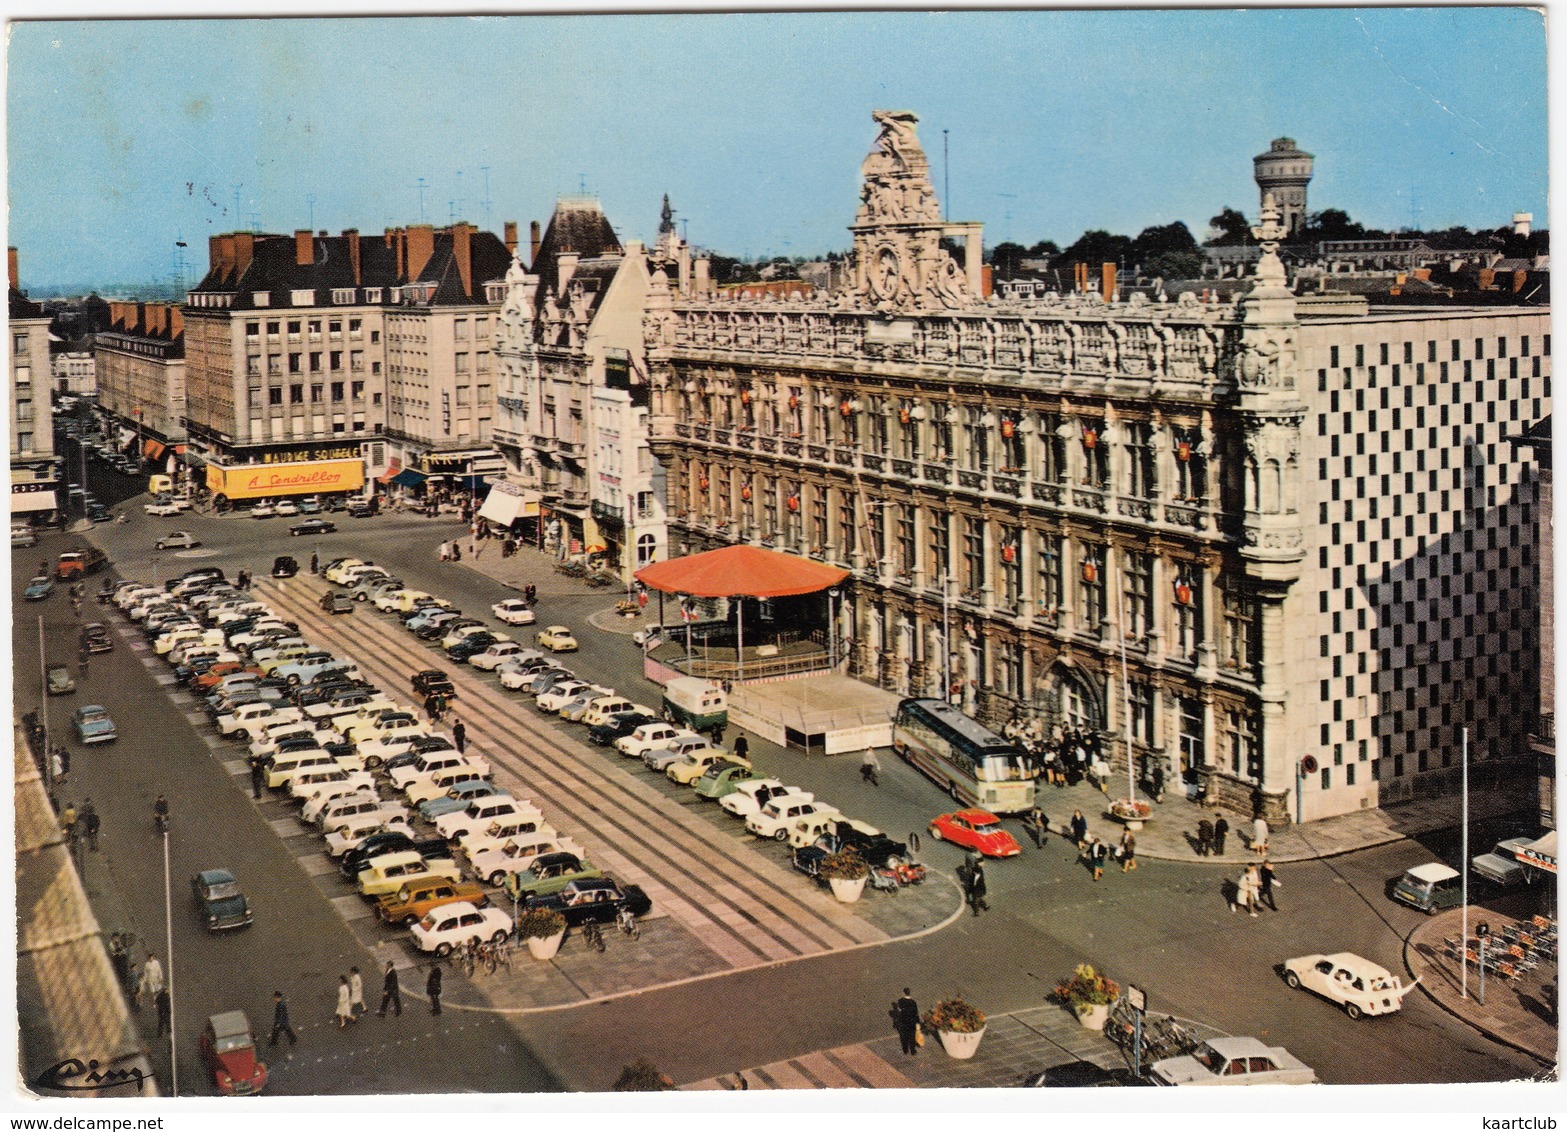 Valenciennes: DAF DAFFODIL, SIMCA 1000, CITROËN AMI 6, 2CV, DKW 3=6, FIAT 850, RENAULT 4, PEUGEOT 404 - L'Hotel De Ville - Turismo